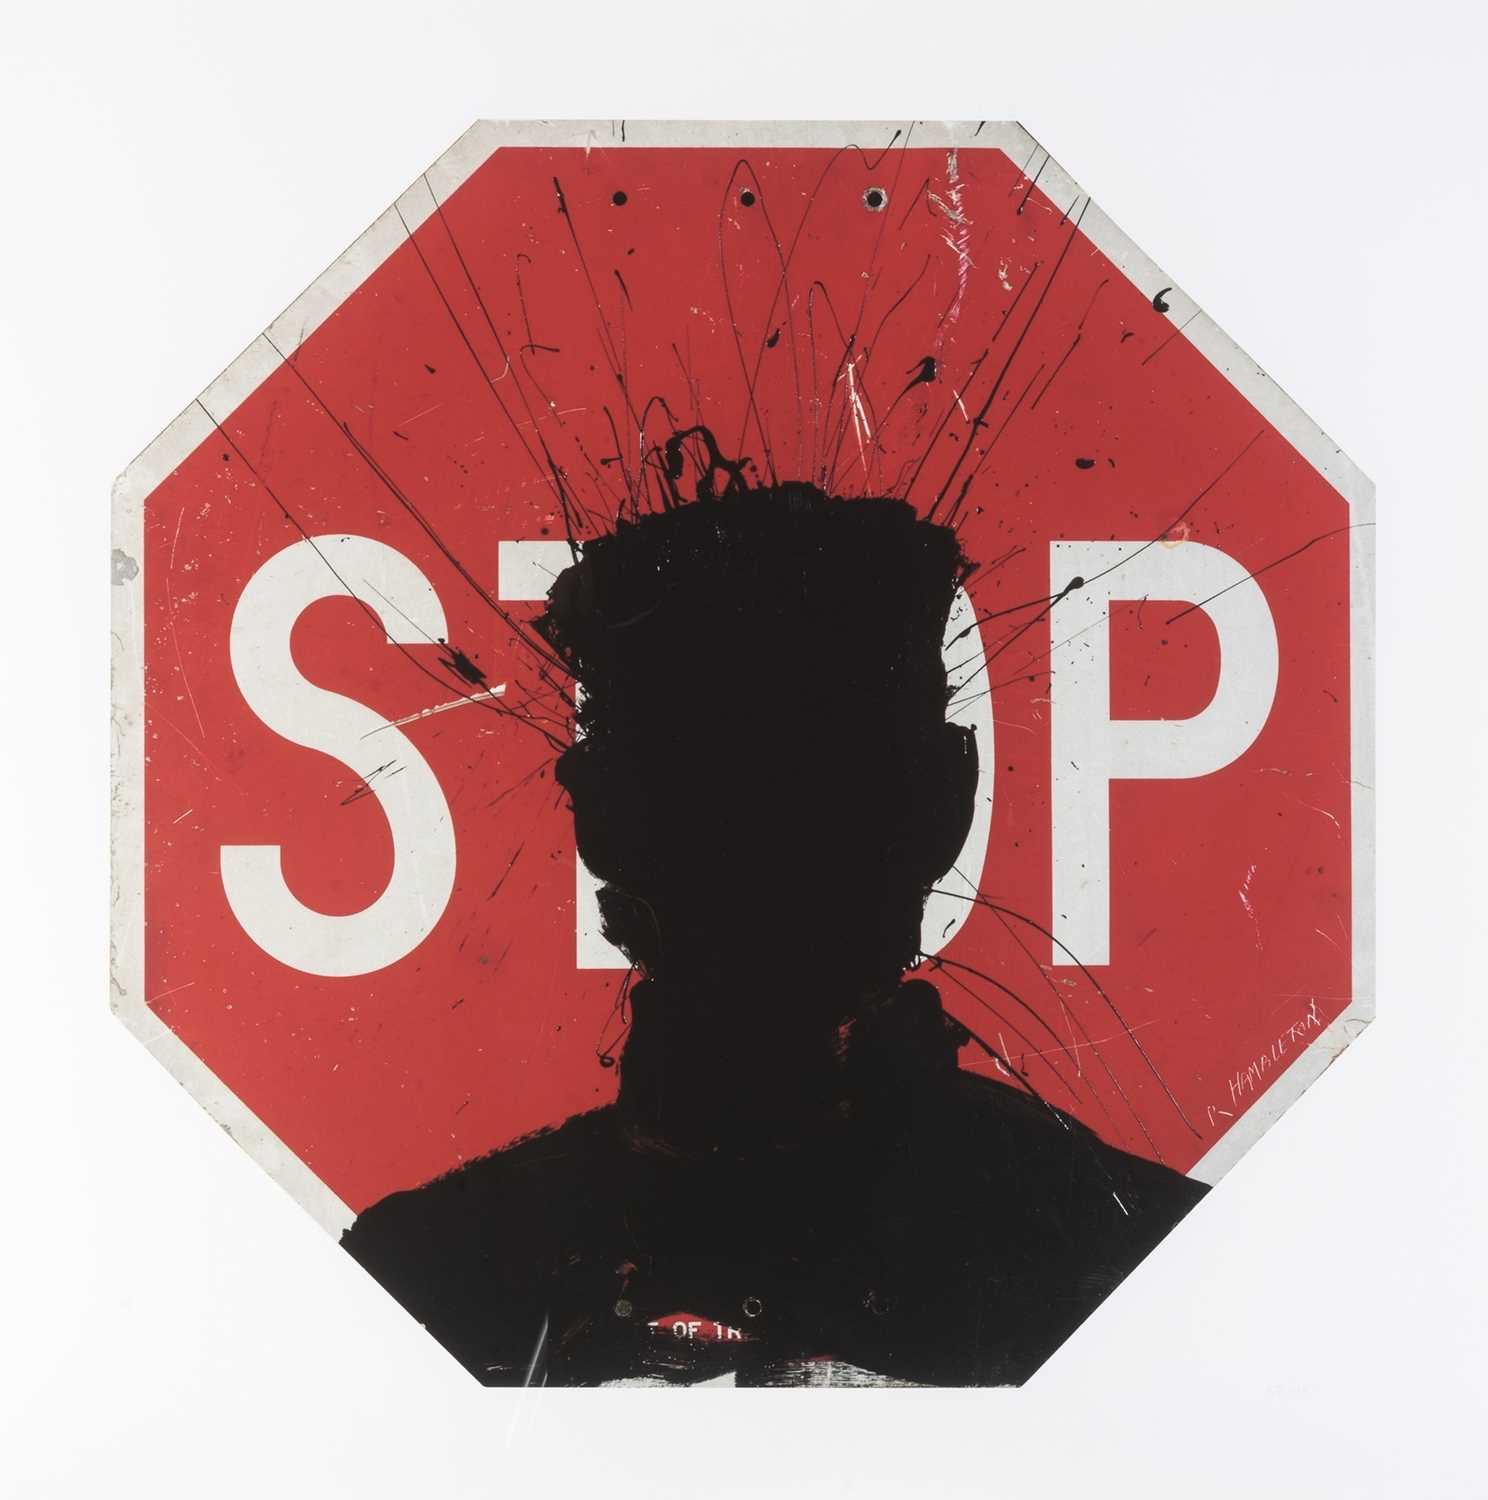 Lot 152 - Richard Hambleton (Canadian 1952-2017), 'Stop Sign', 2018